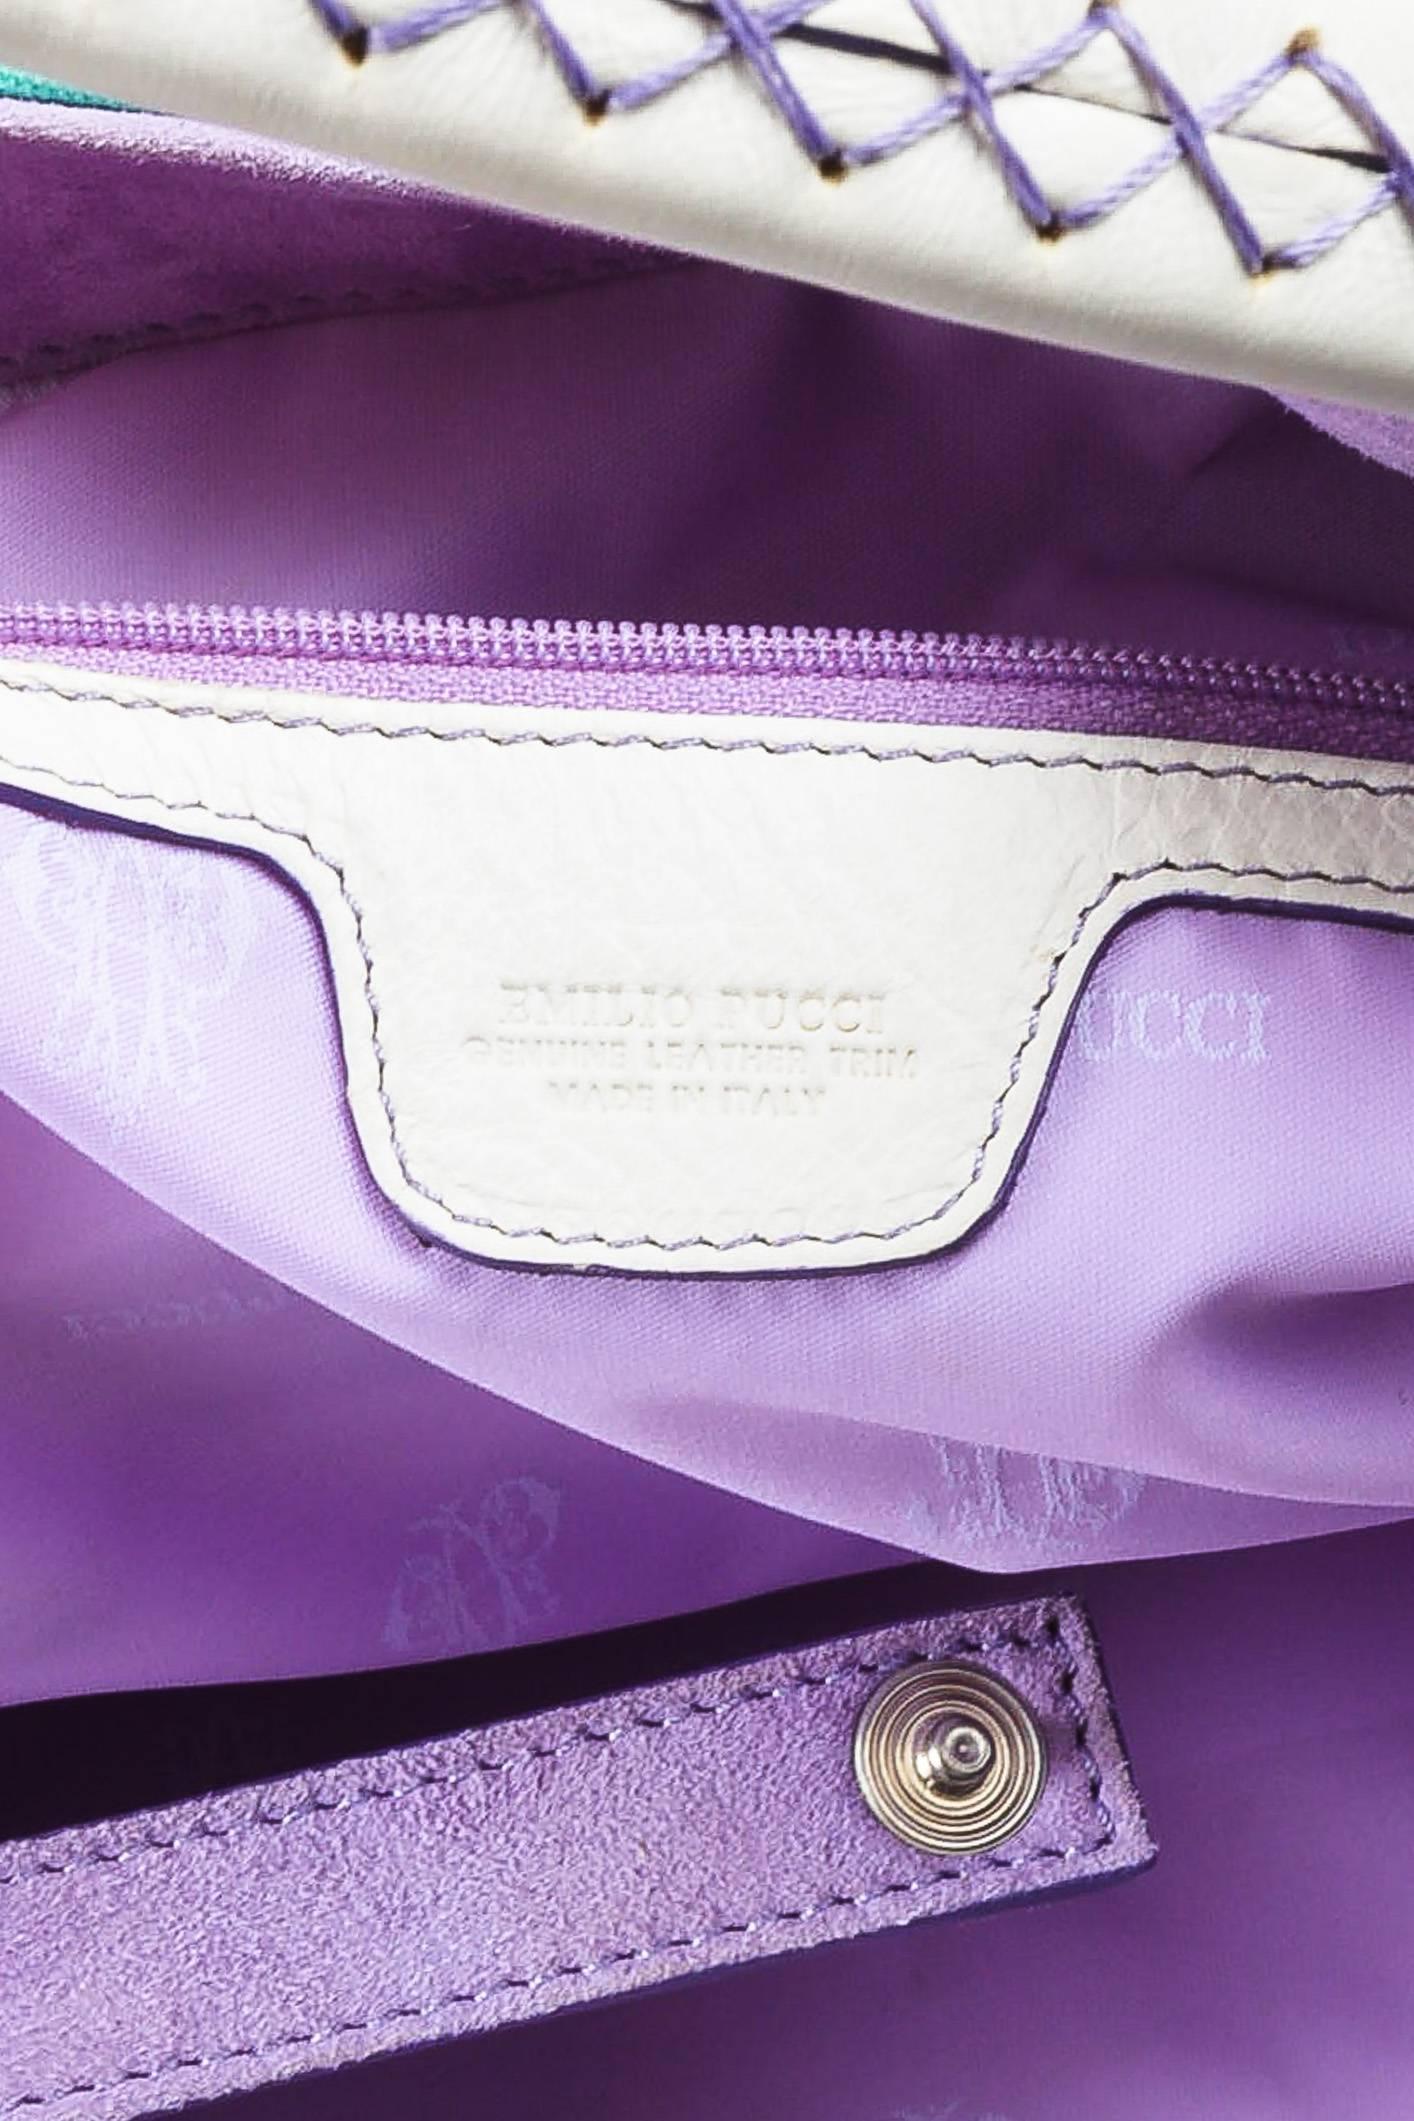 Emilio Pucci NWT White Lavender Teal Canvas Leather Trim Printed Pockets Handbag For Sale 1